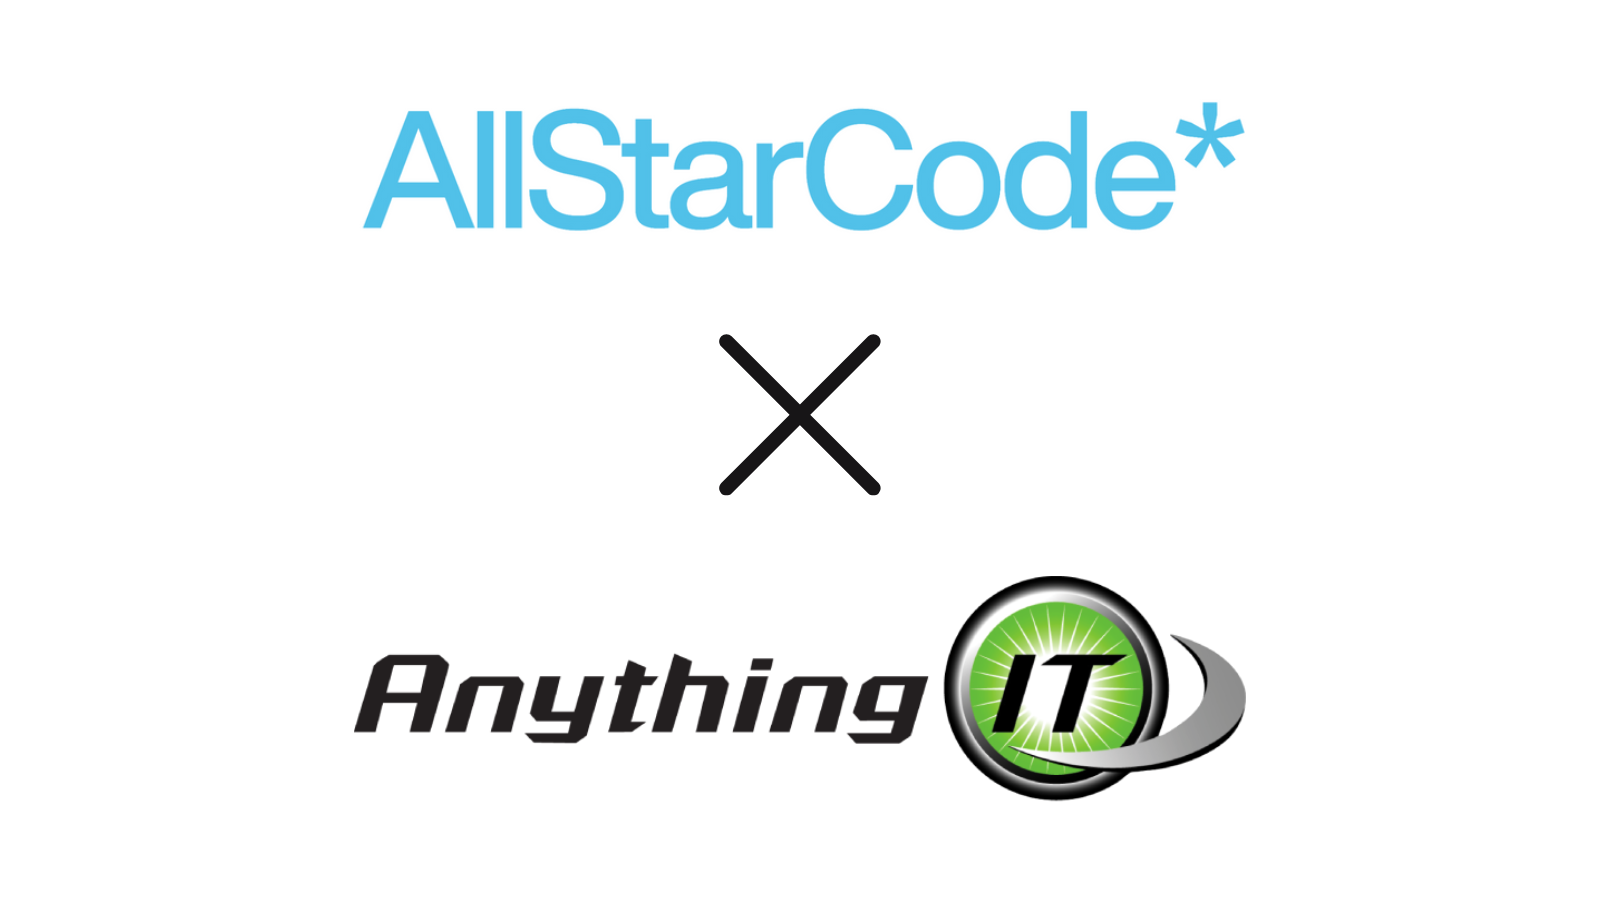 All Star Code